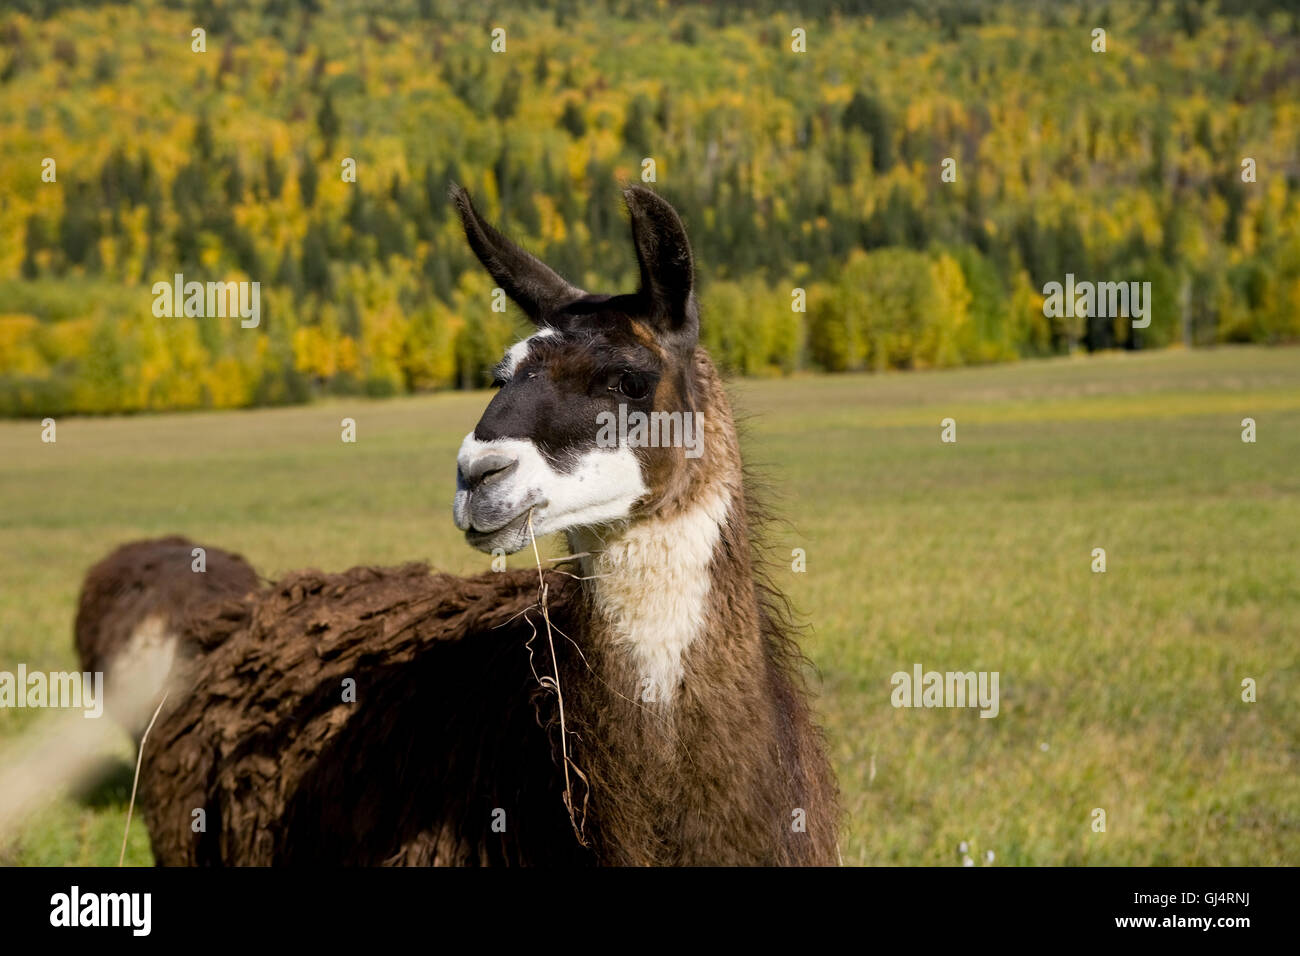 Llama eating grass Stock Photo